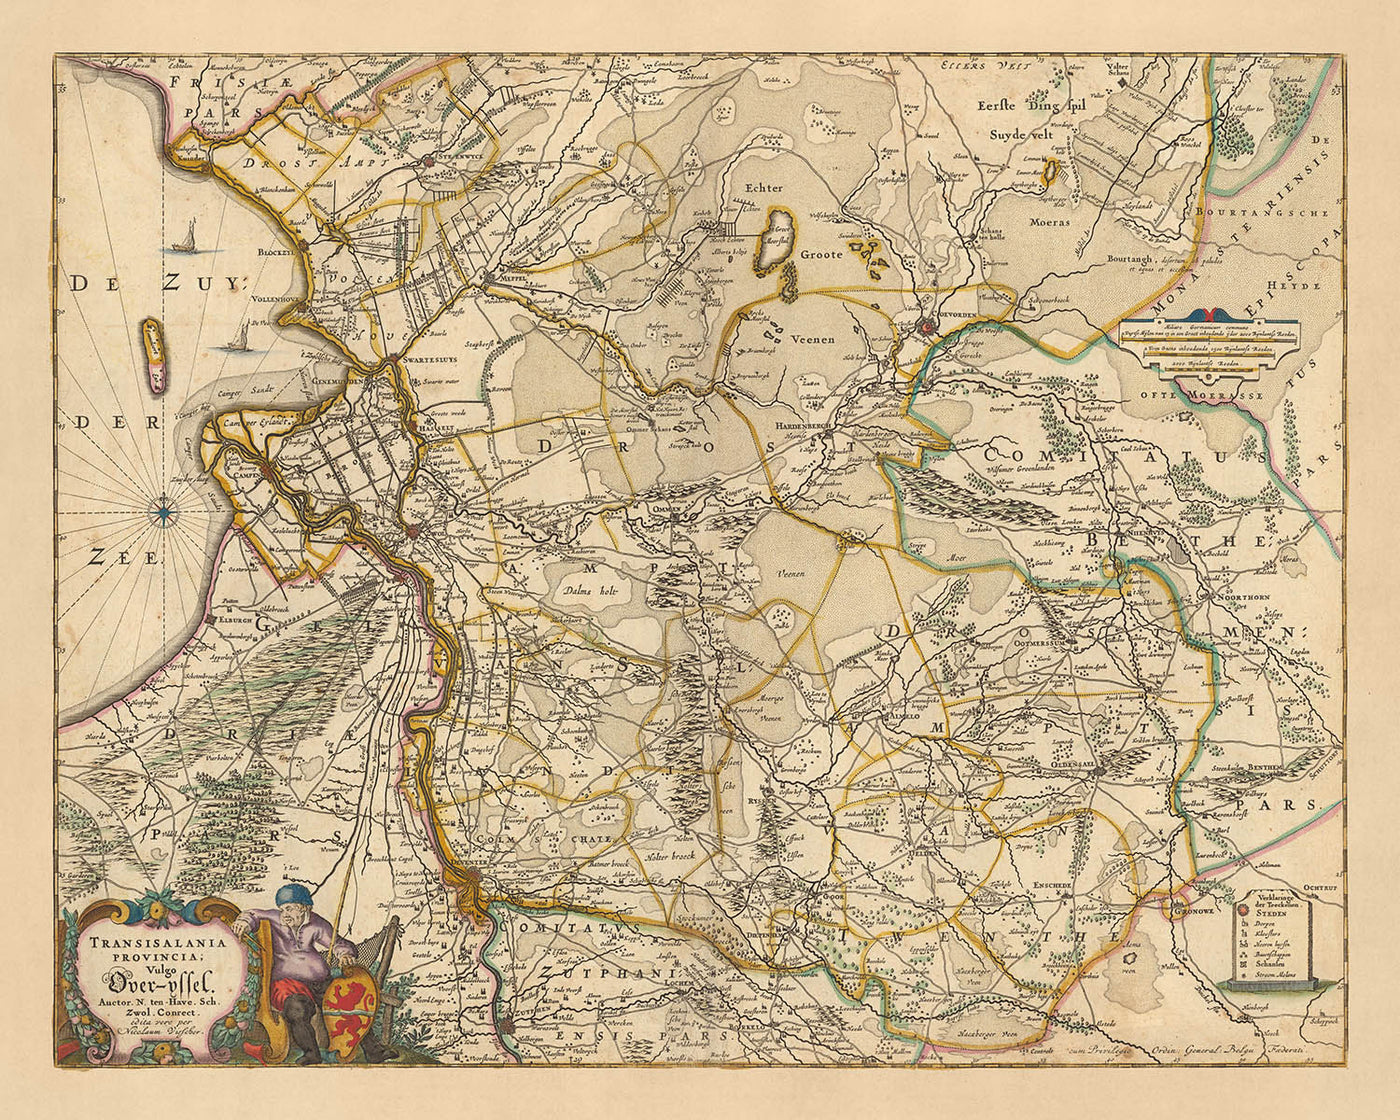 Ancienne carte d'Overijssel, Pays-Bas par Visscher, 1690 : Zwolle, Kampen, Hengelo, Deventer, Enschede